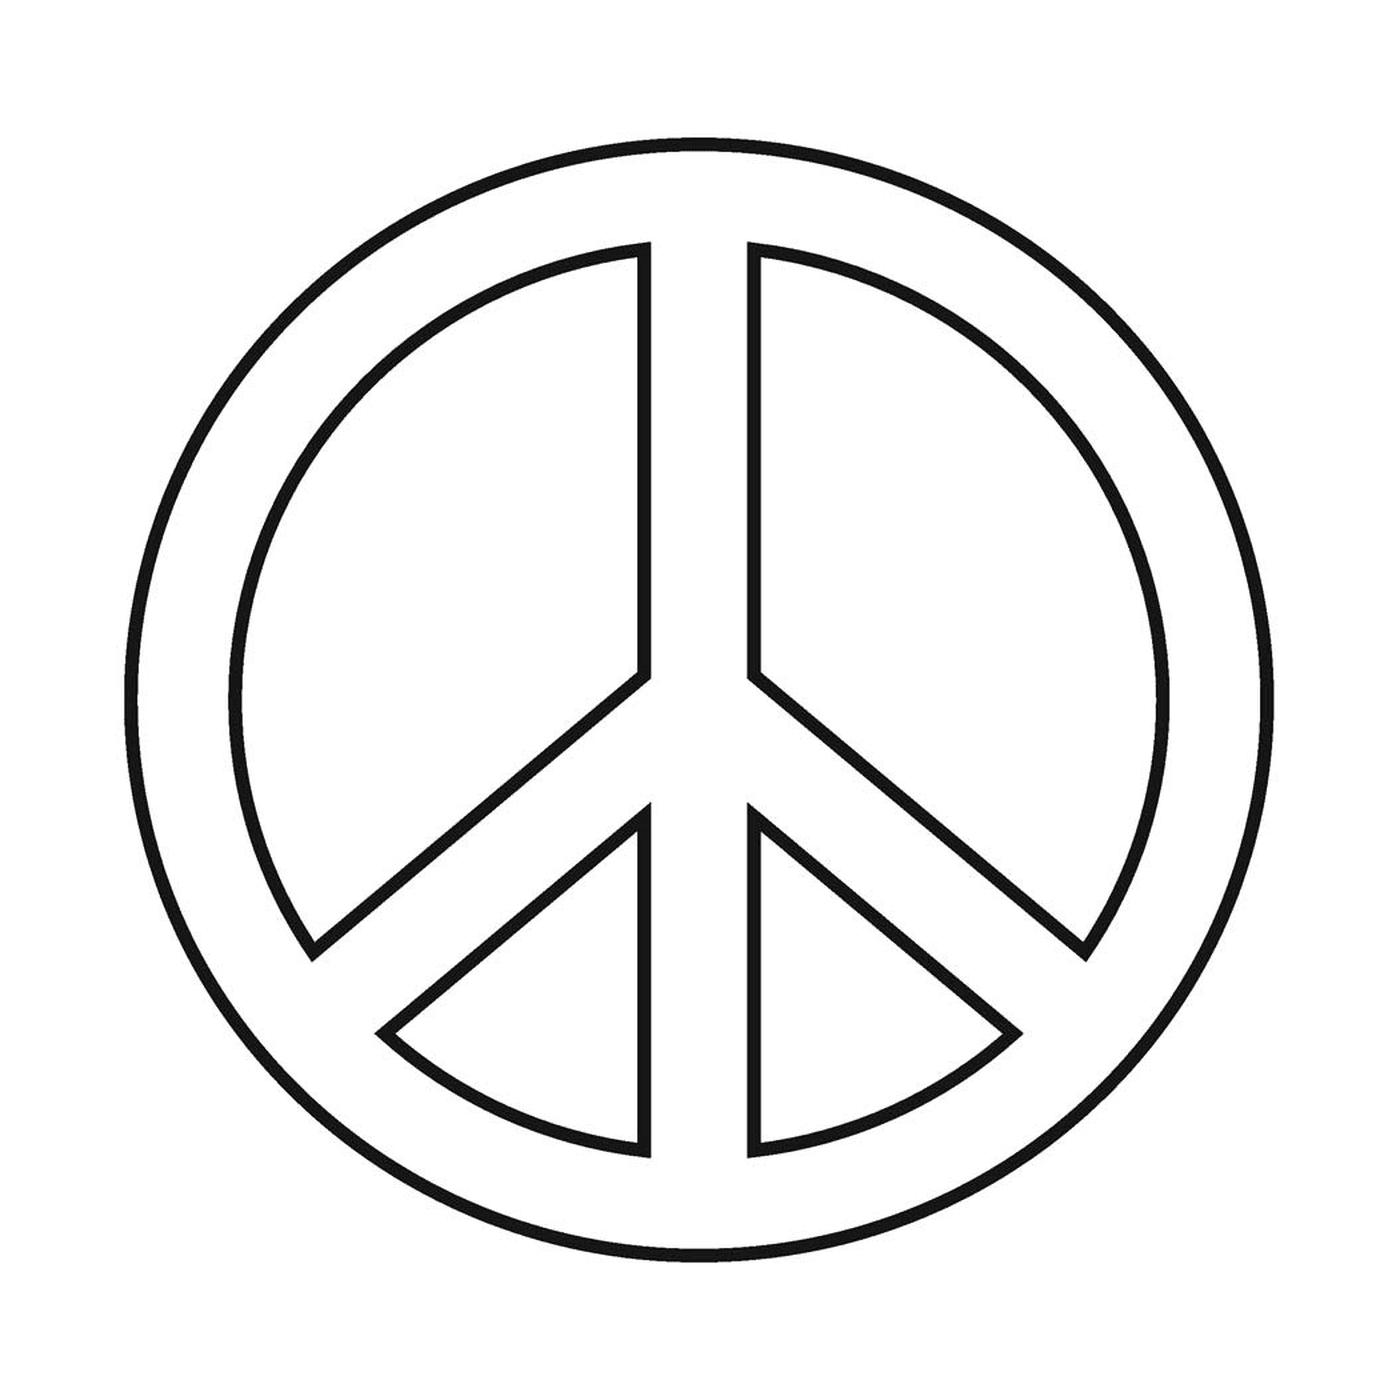  Peace sign, logo 